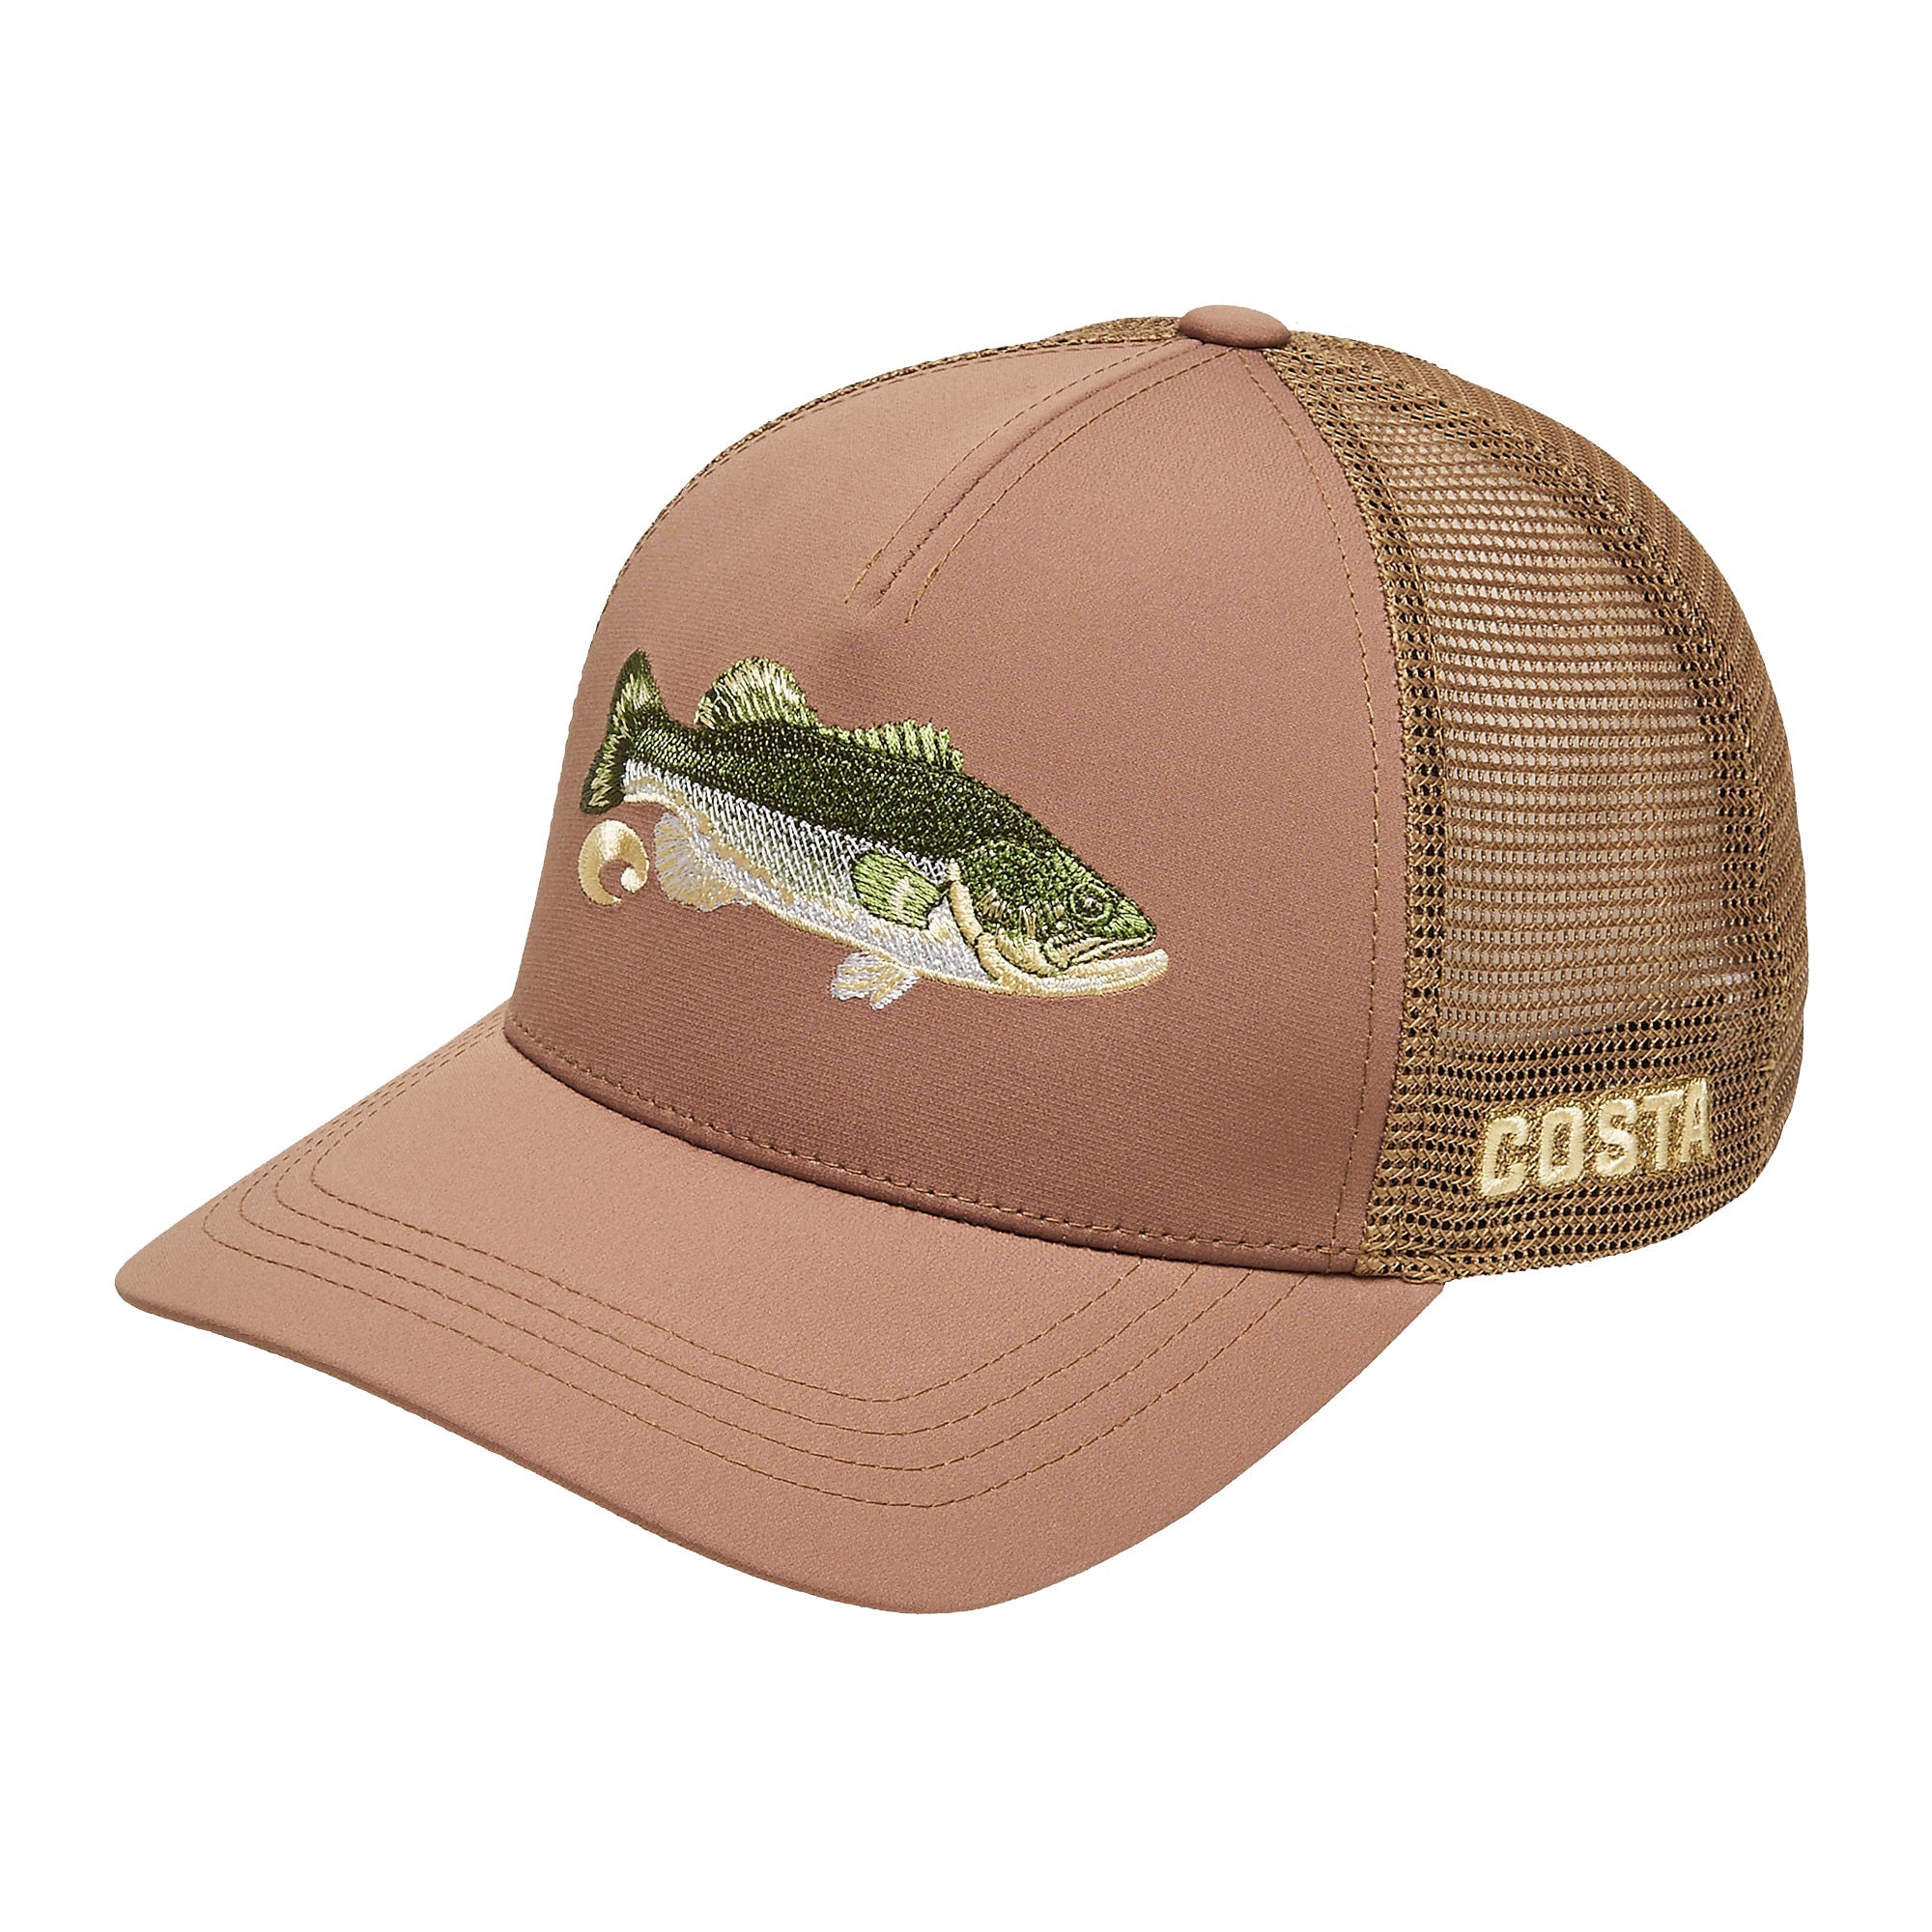 Costa Hats, Visors, and Facemasks: Stylish and Functional - CHAOS Fishing